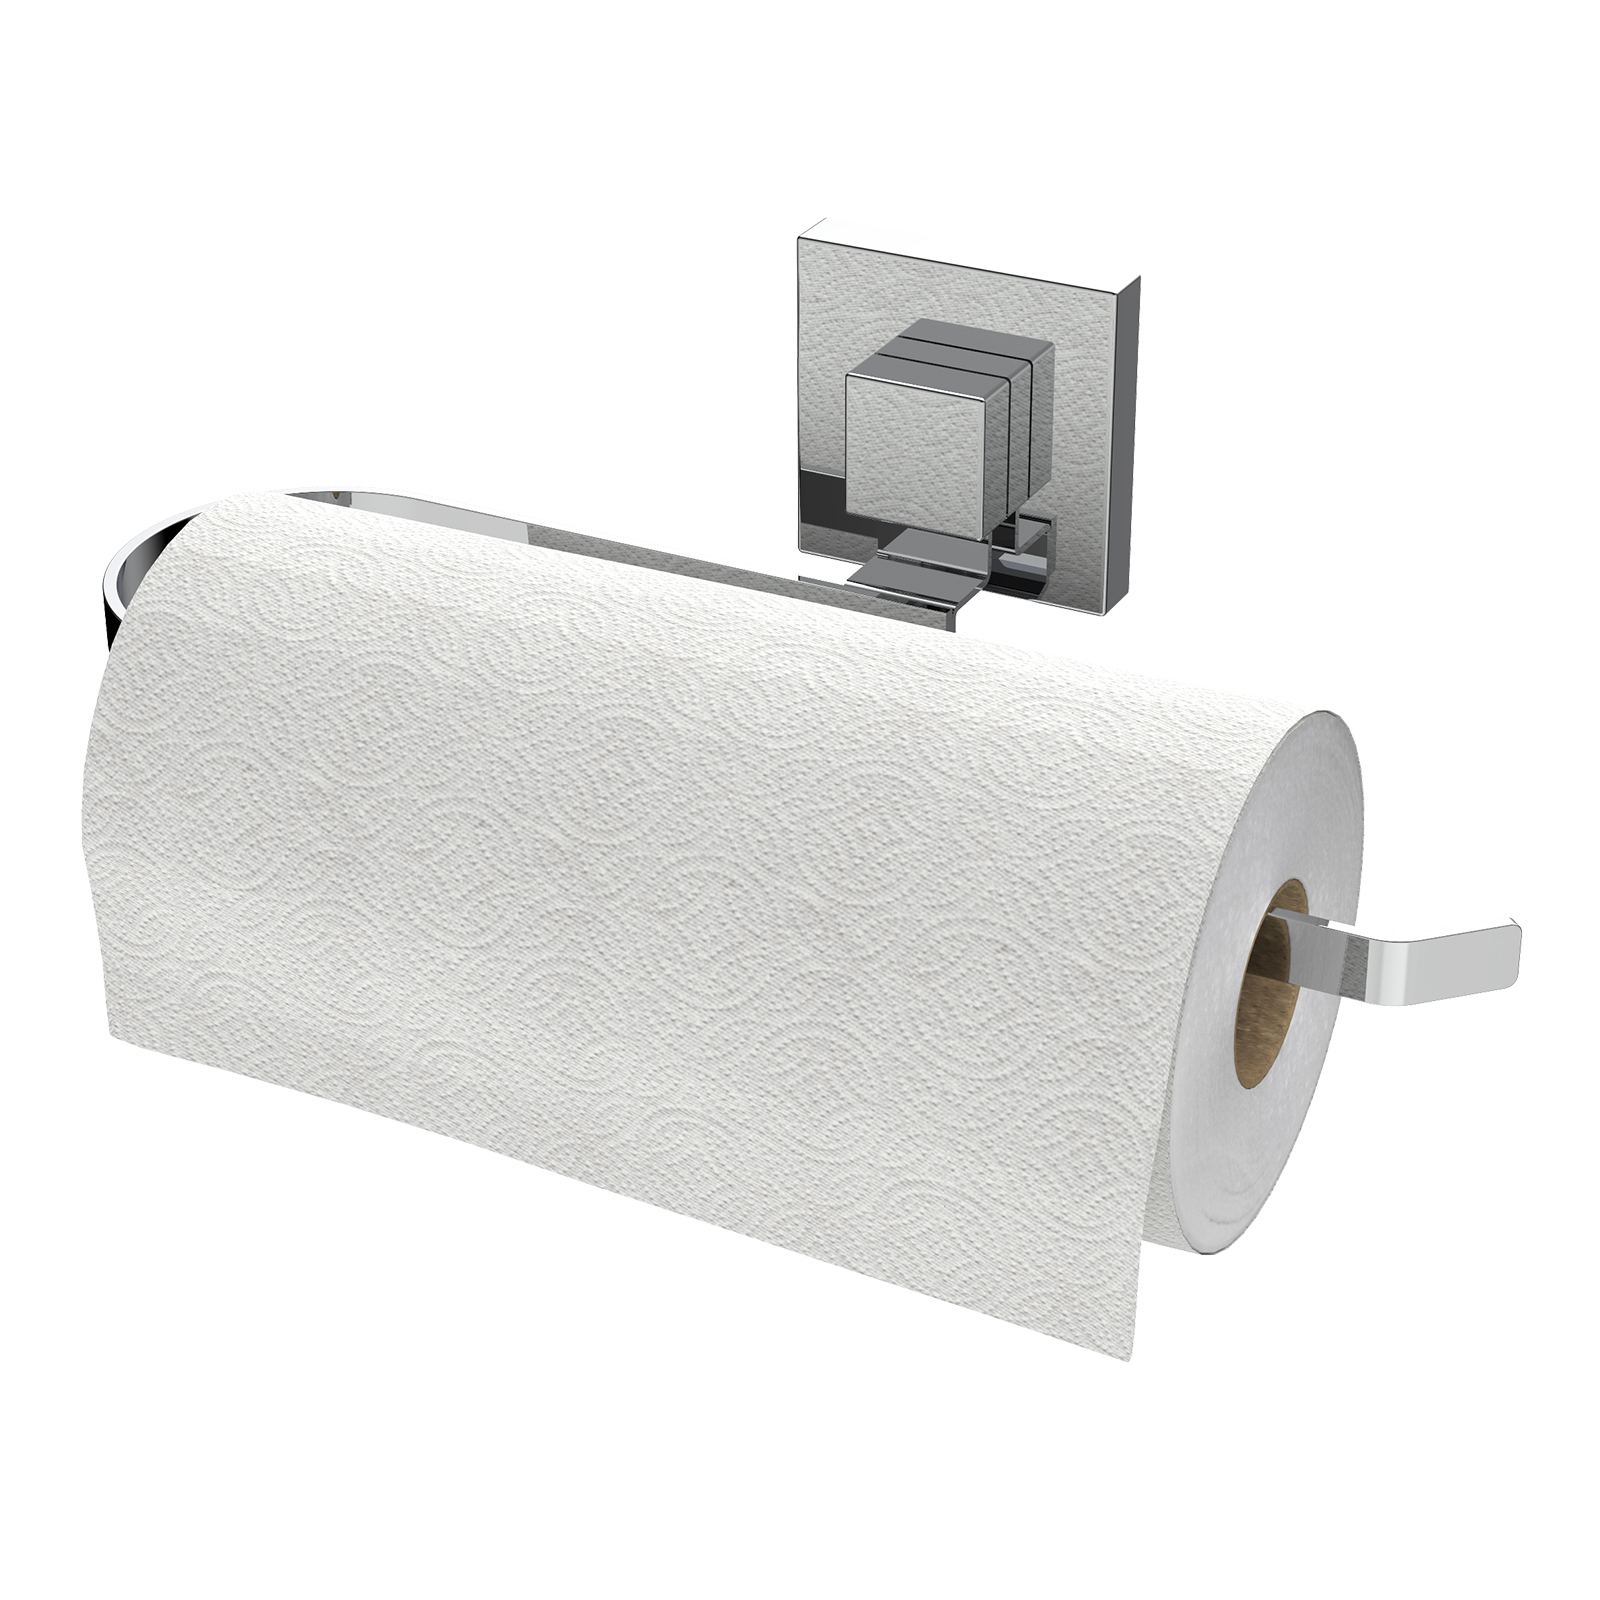 Fusion-Loc Suction Paper Towel Holder - Fusion-Loc